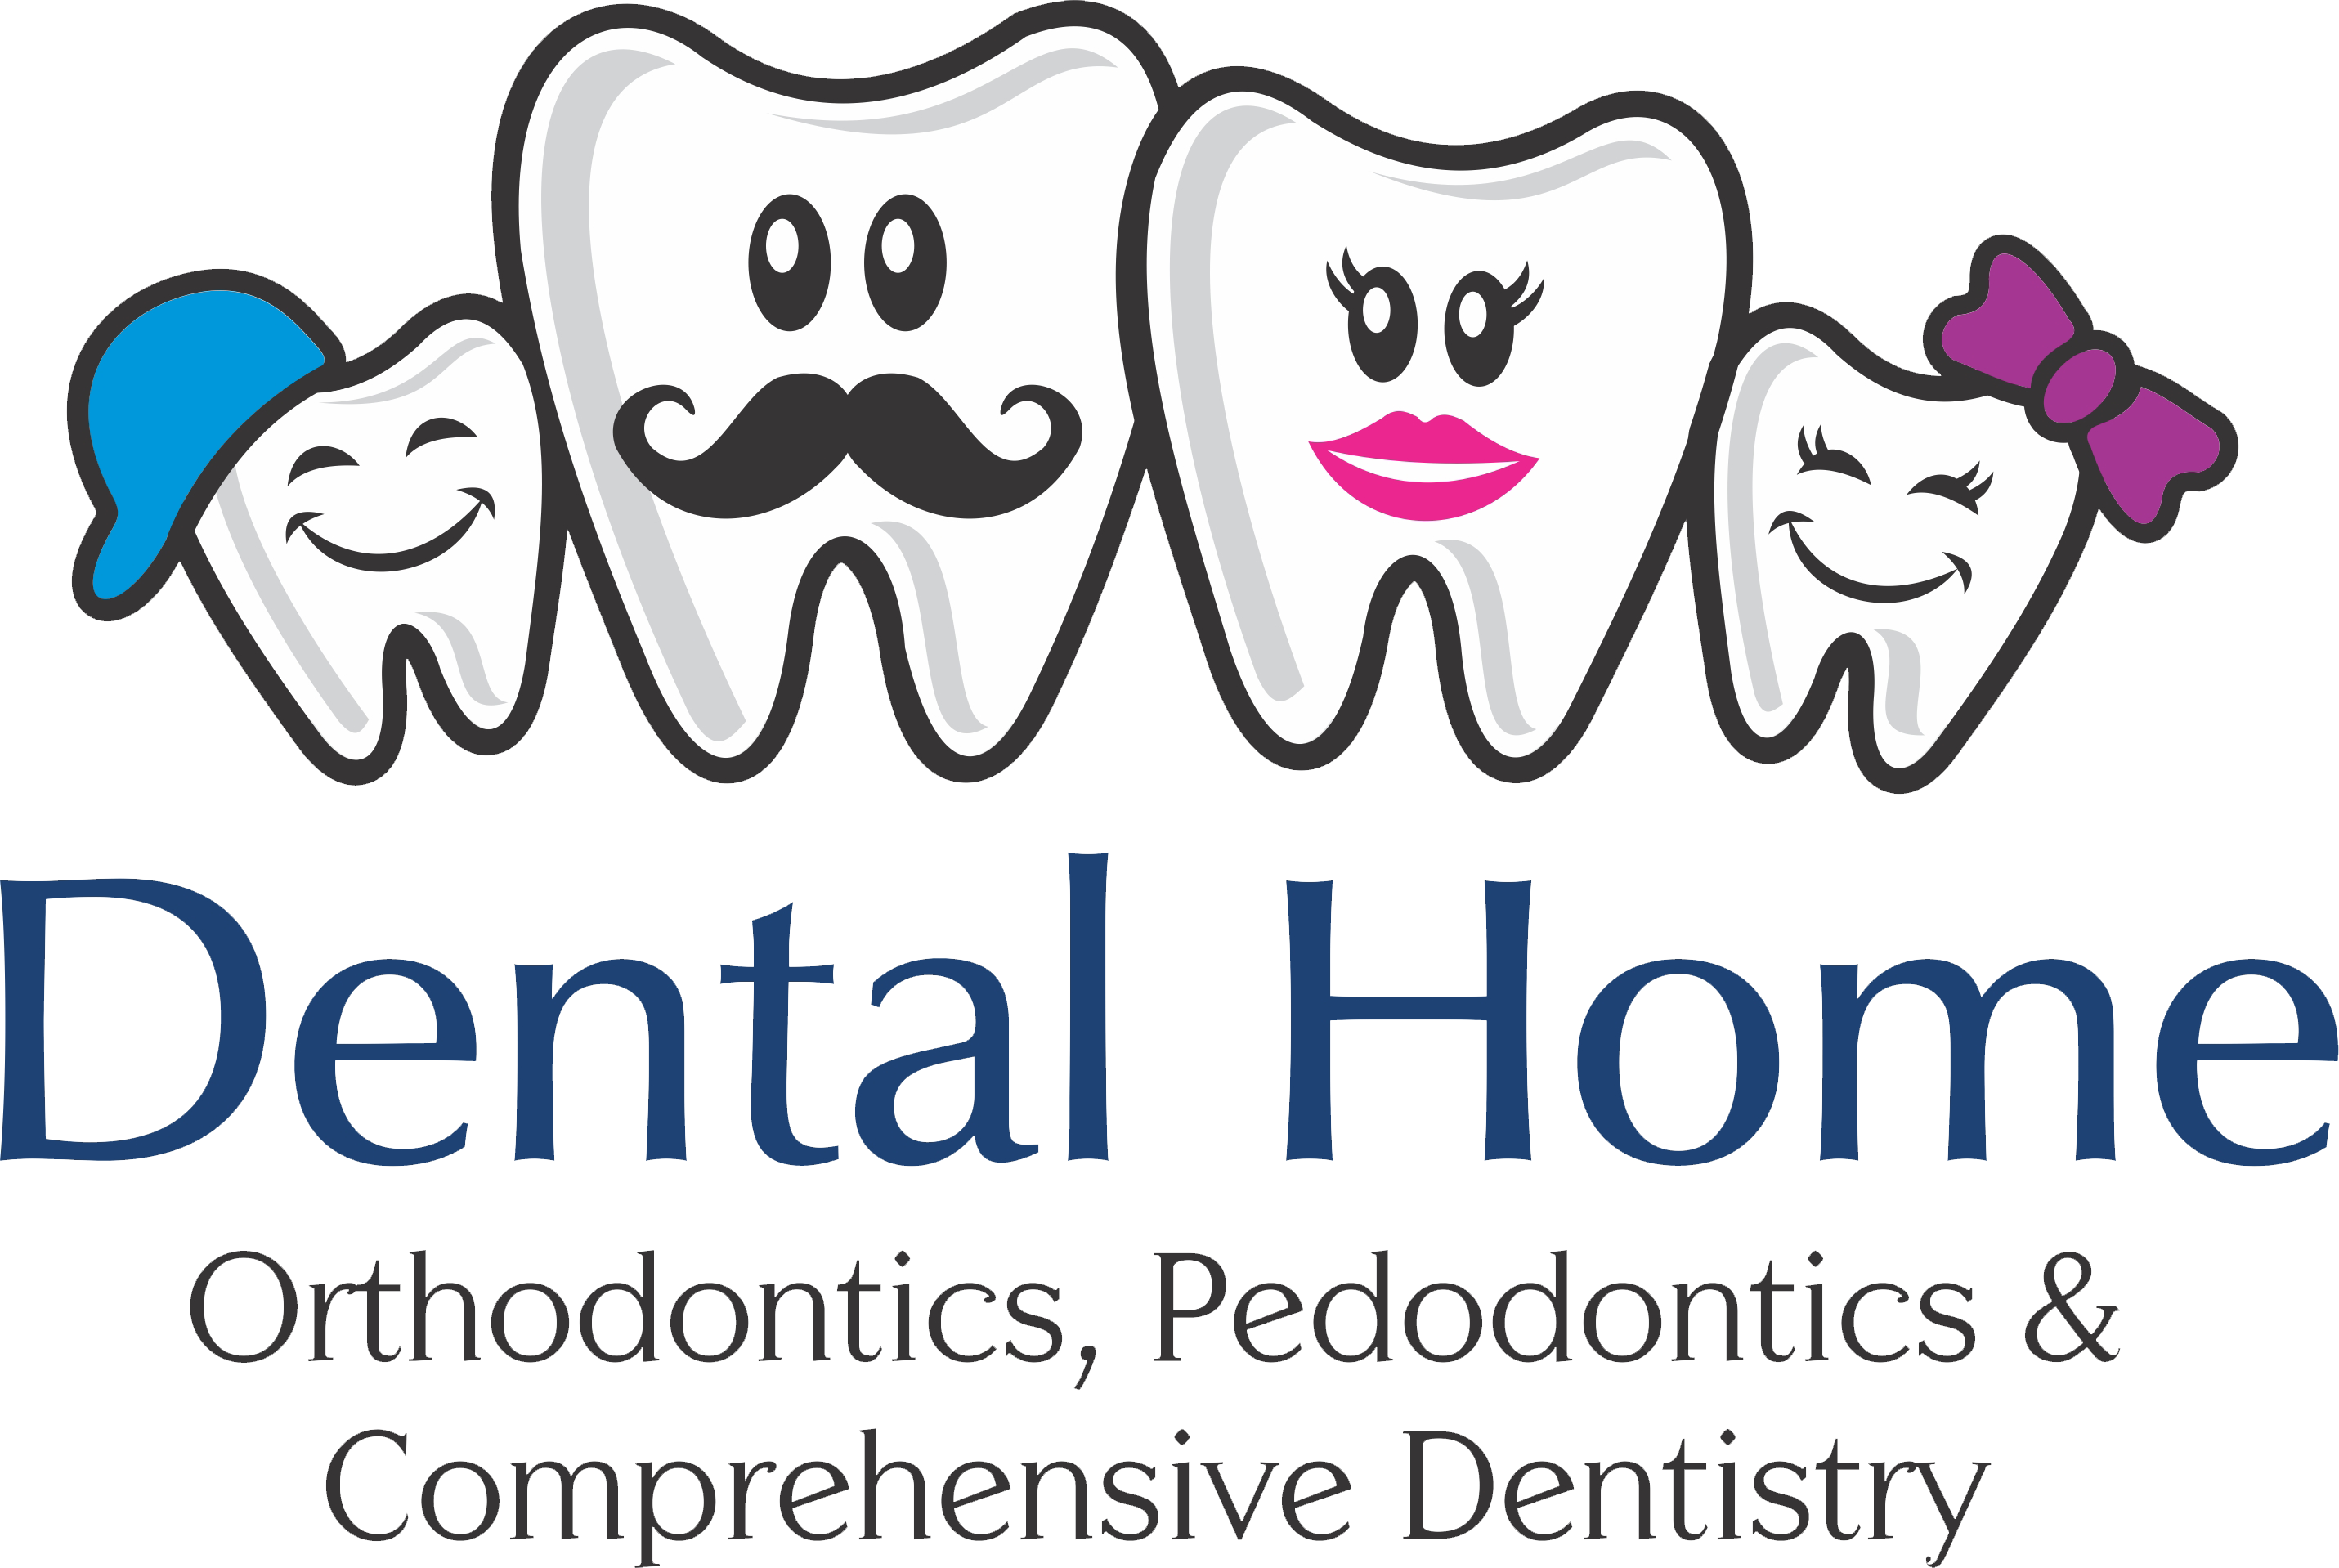 Dental home|Hospitals|Medical Services